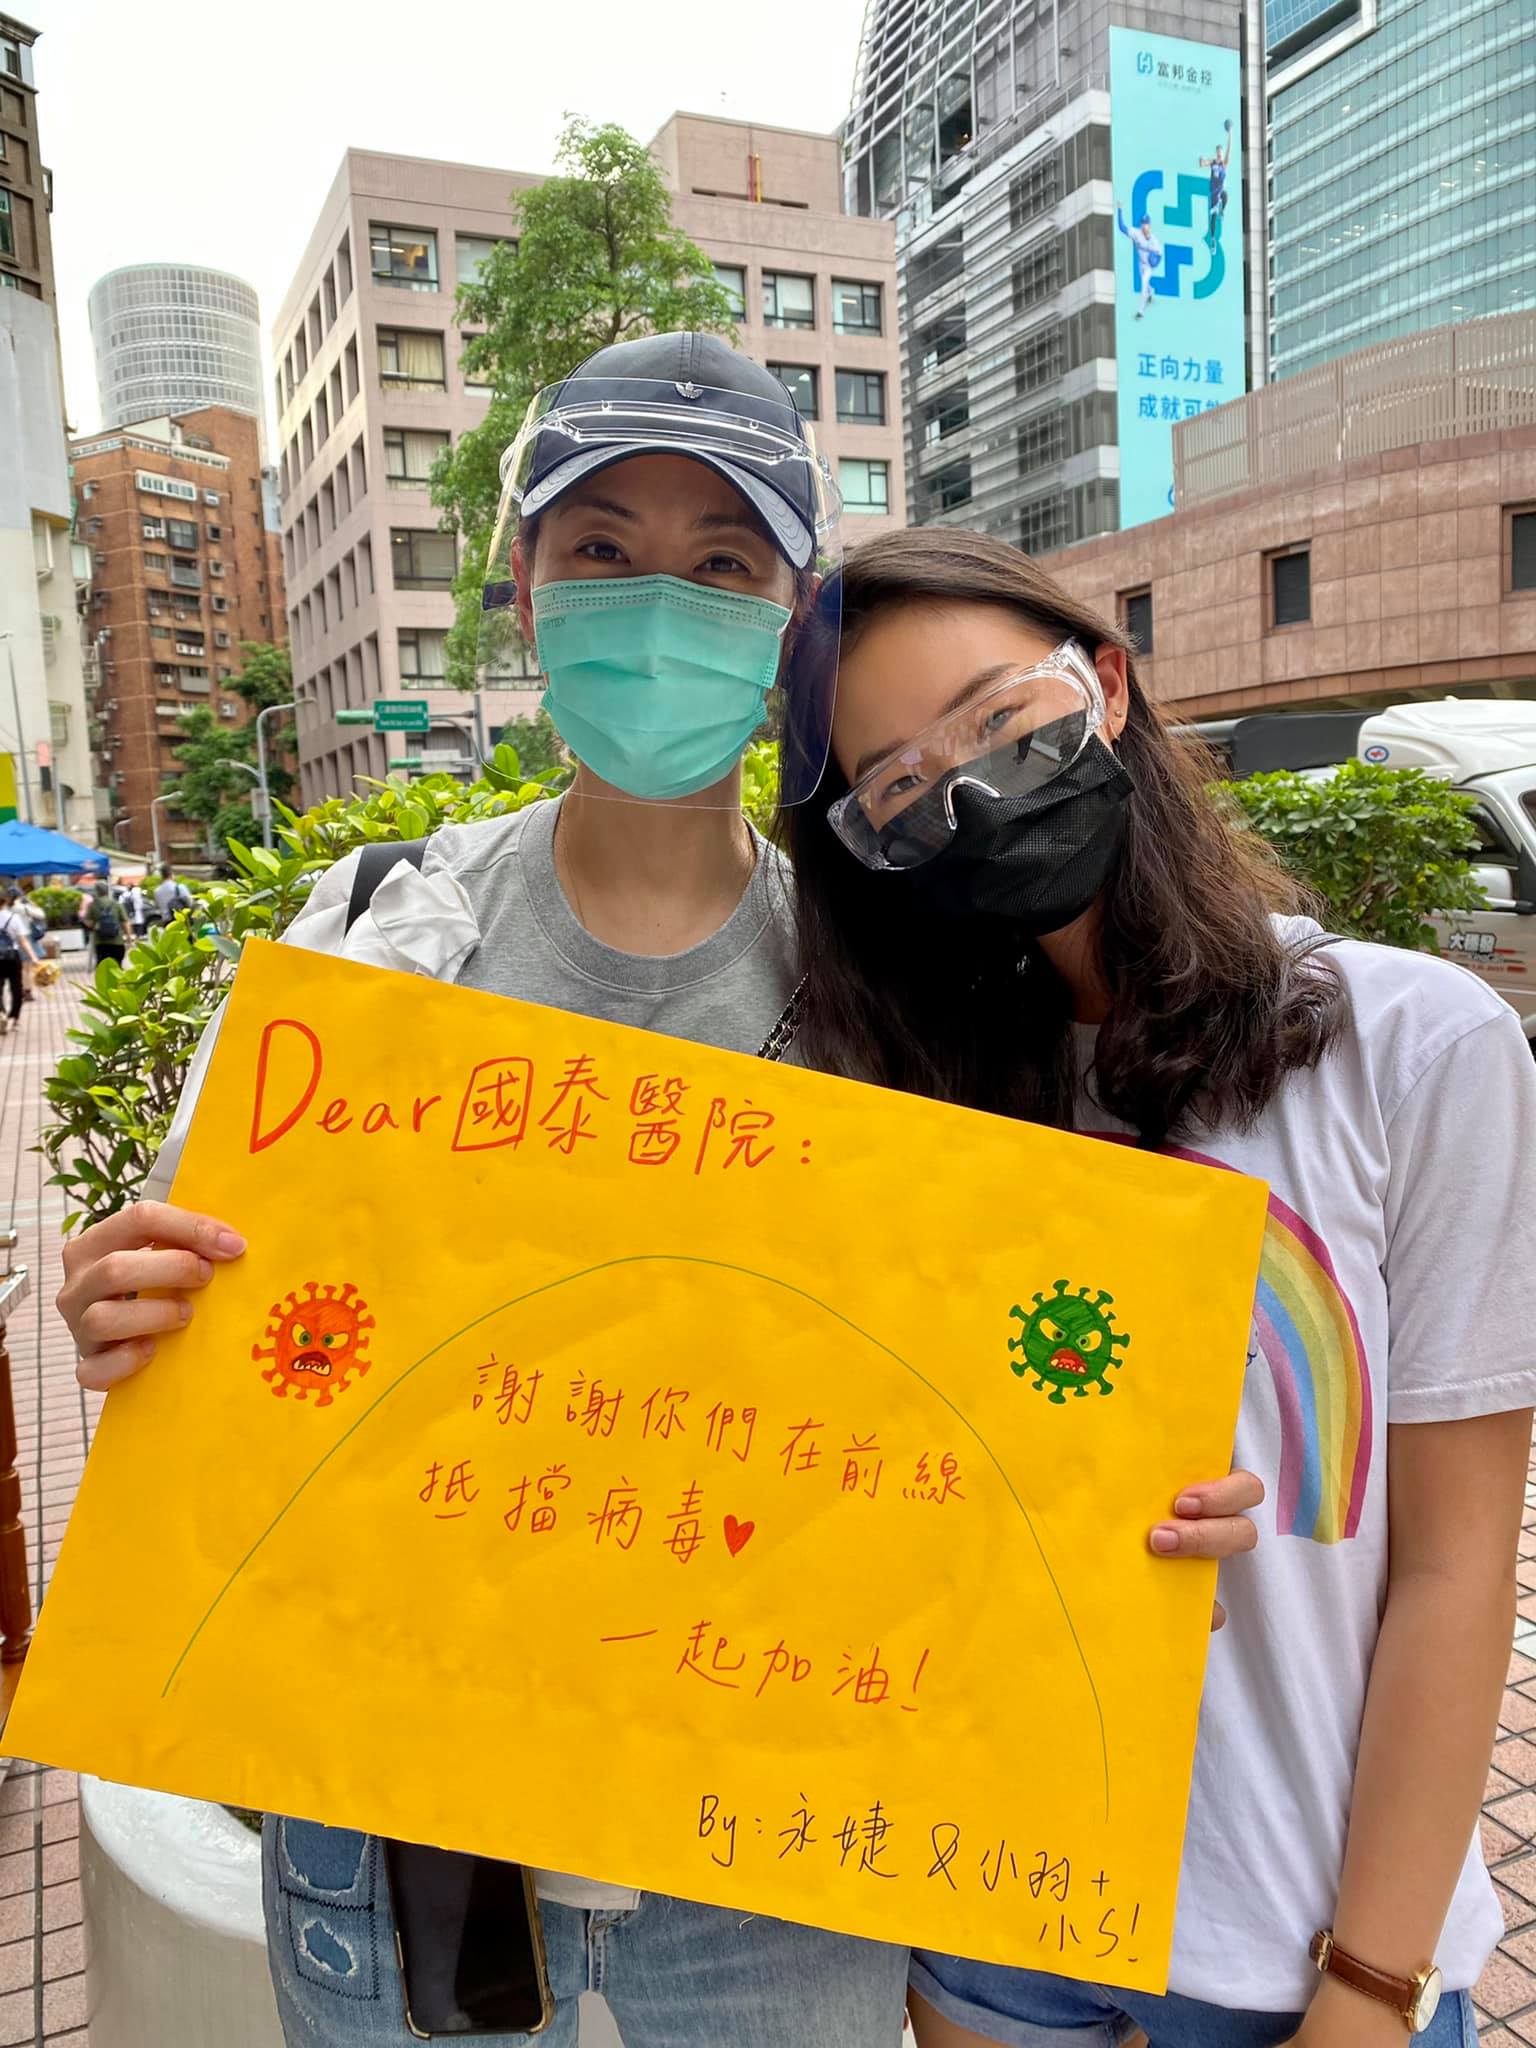 Sandra Wang ลูกสาวคนที่ 2 ของ Janet Jia (賈永婕) (ด้านขวา) เป็นกำลังสำคัญในการส่งข้าวกล่องให้กับบุคลากรทางการแพทย์ในครั้งนี้／ภาพจาก賈永婕的跑跳人生 臉書粉絲團